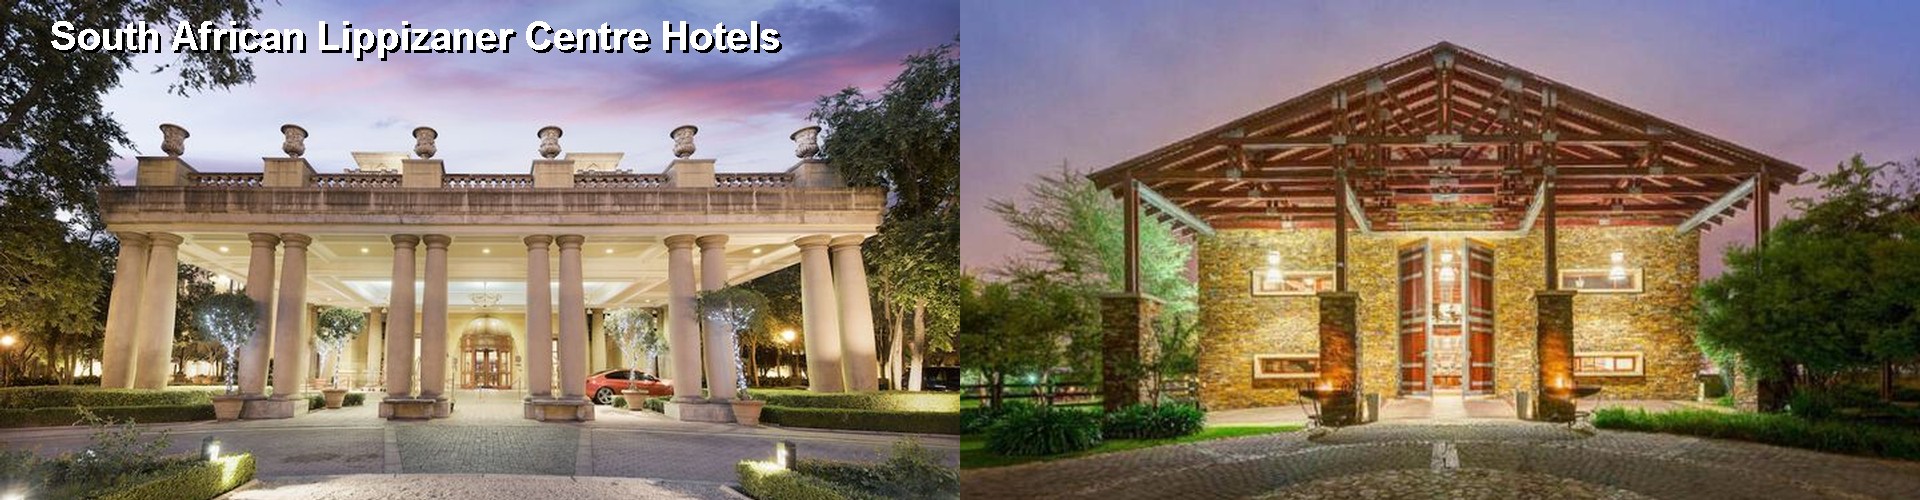 5 Best Hotels near South African Lippizaner Centre